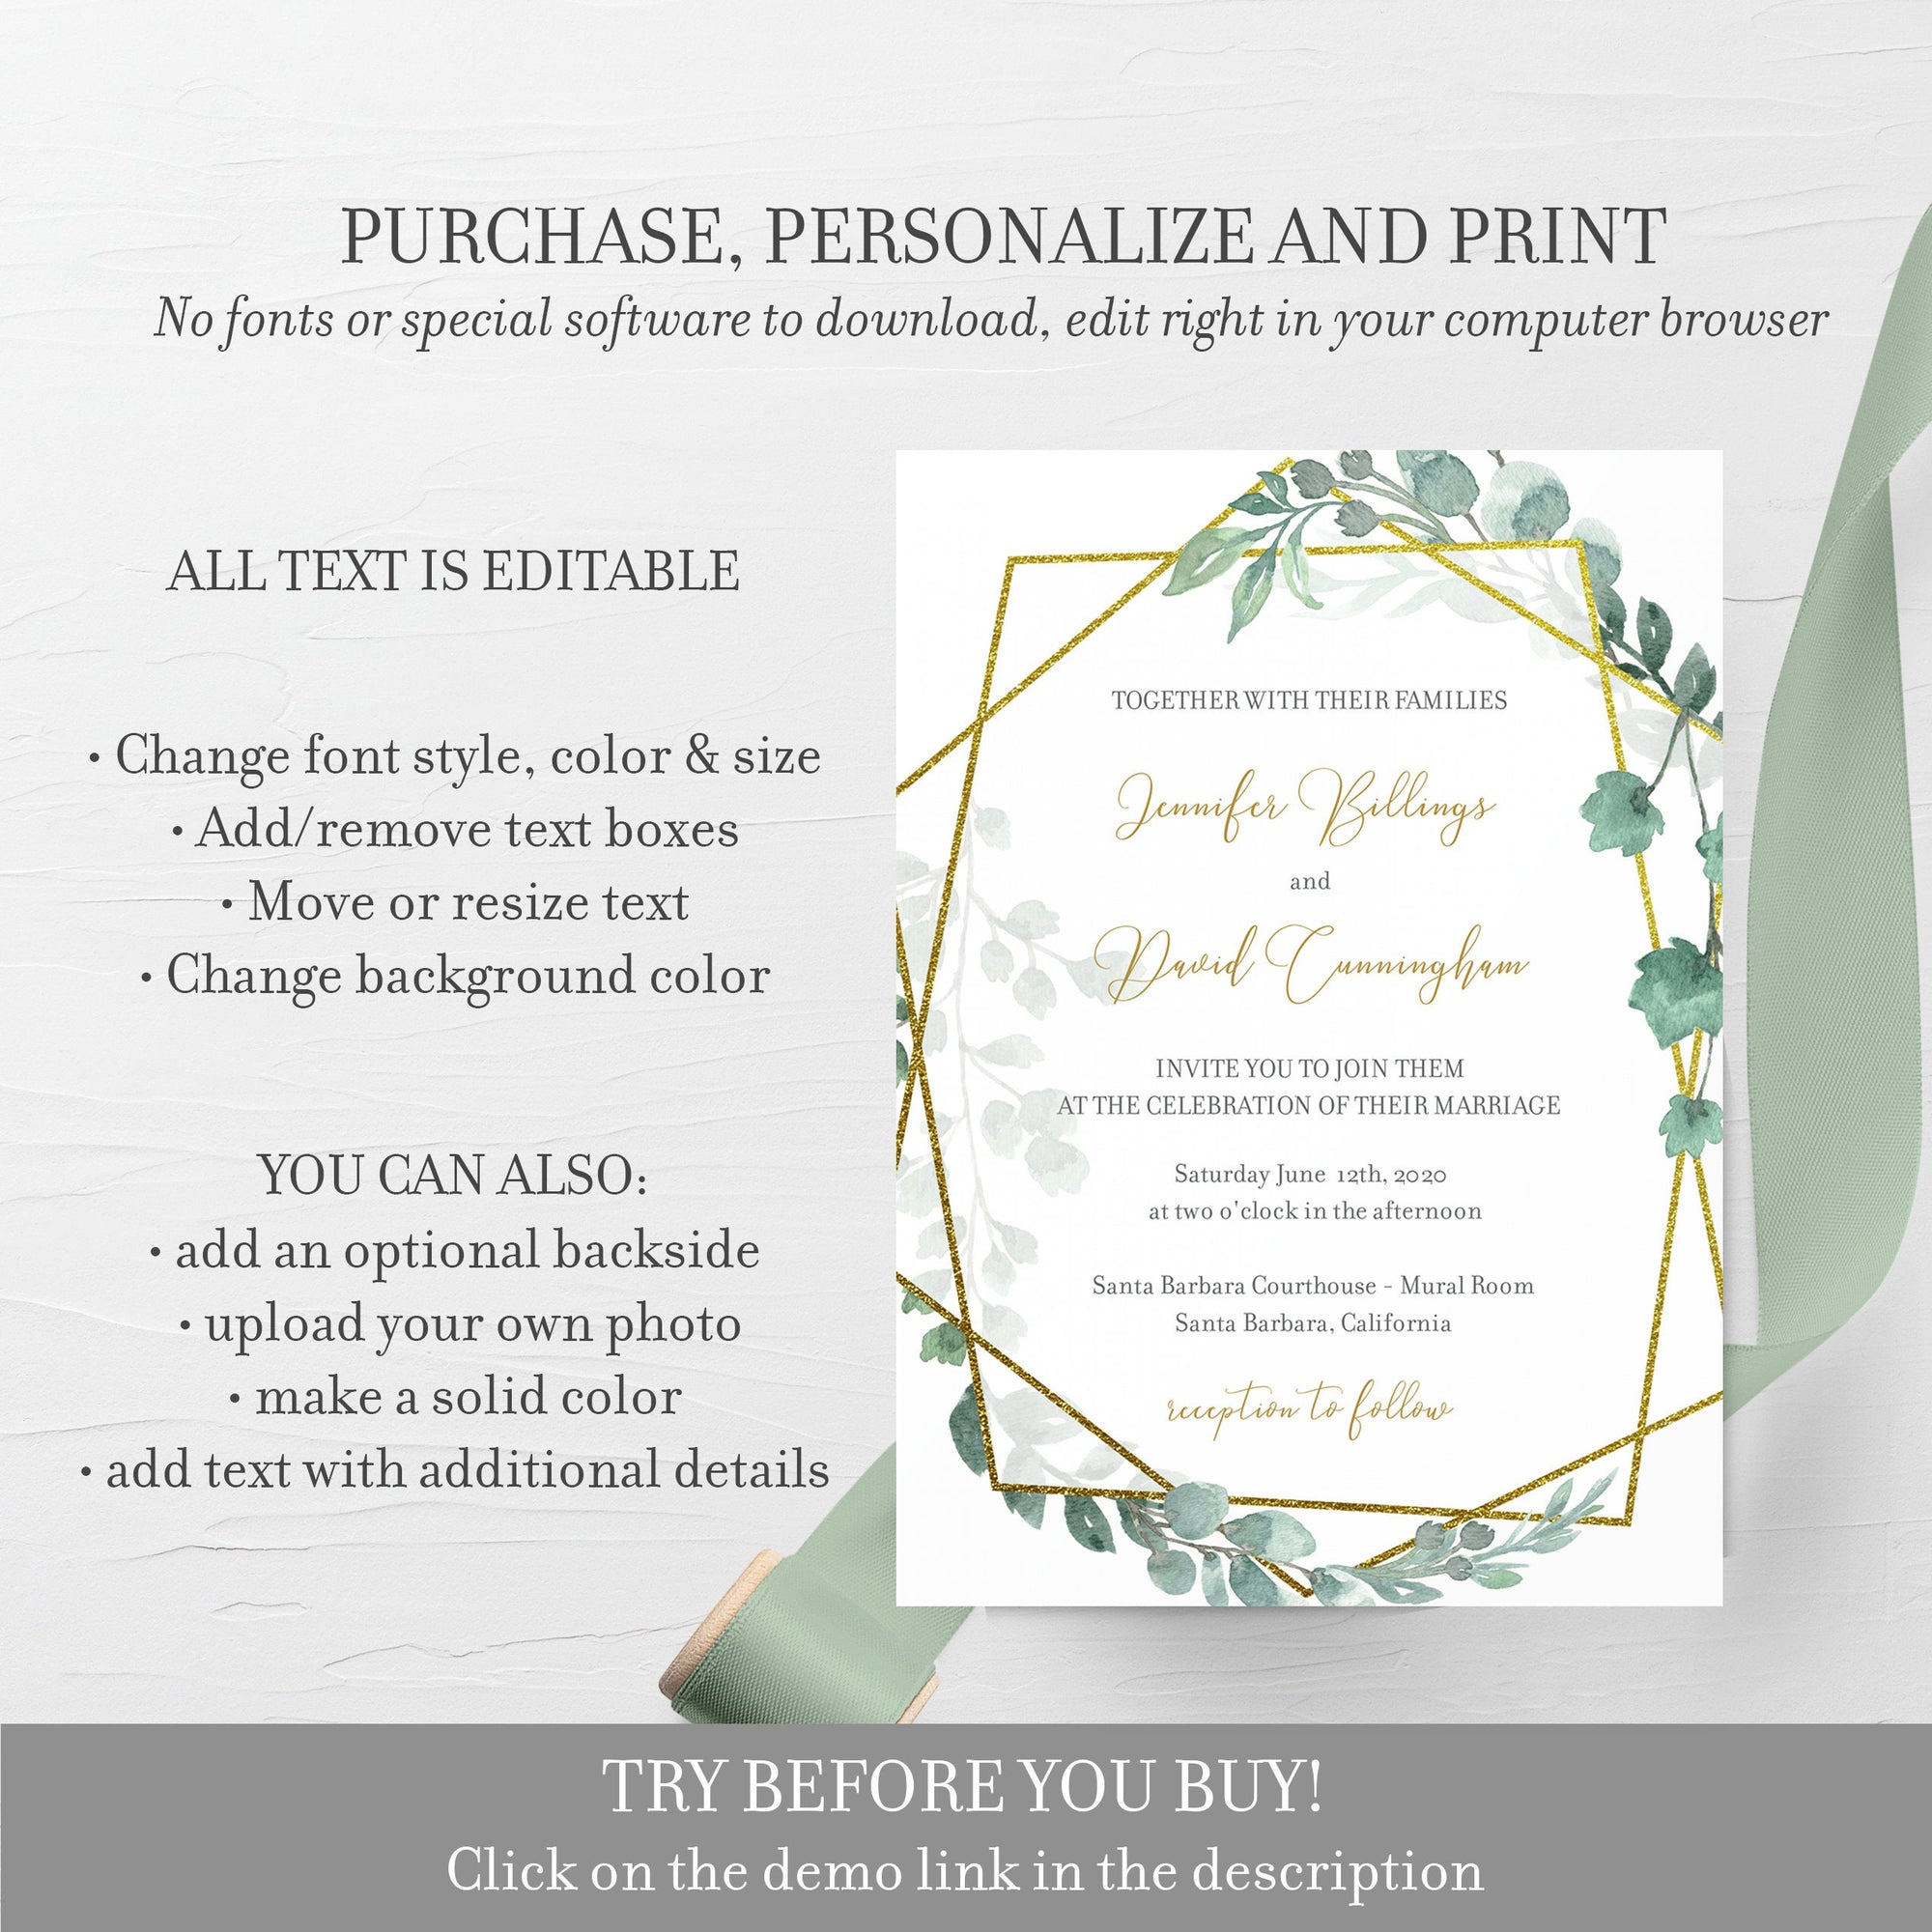 Greenery Wedding Invitation Template, Gold Geometric Wedding Invitation, Editable Wedding Invitation Suite, INSTANT DOWNLOAD - GFG100 - @PlumPolkaDot 